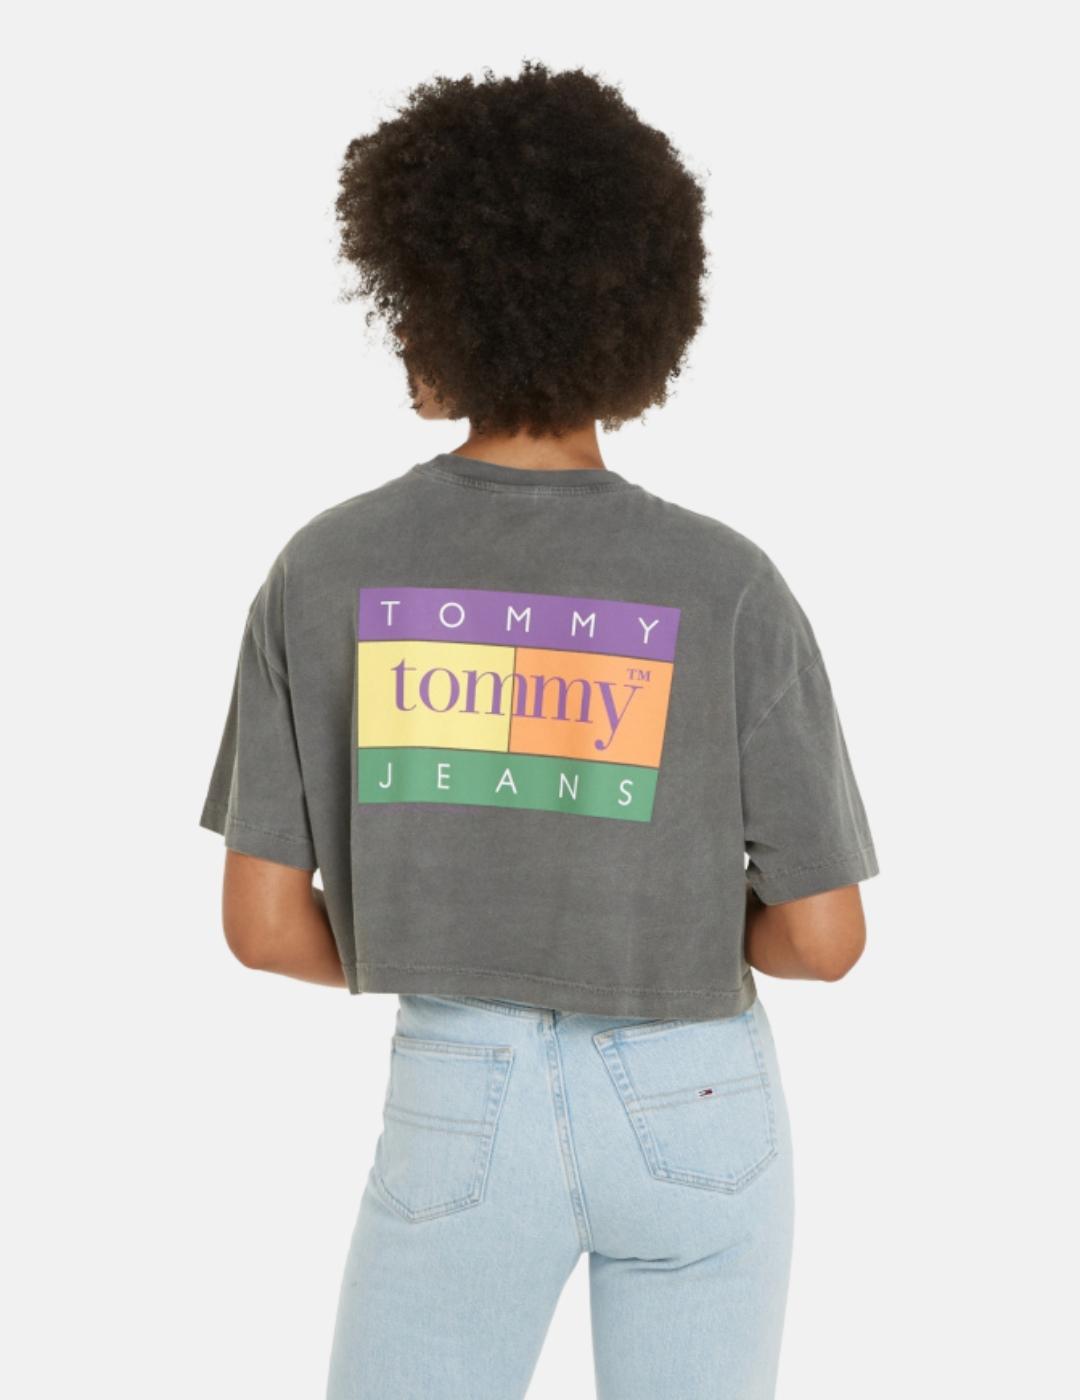 Camiseta Tommy Jeans gris logo cuadrado mujer